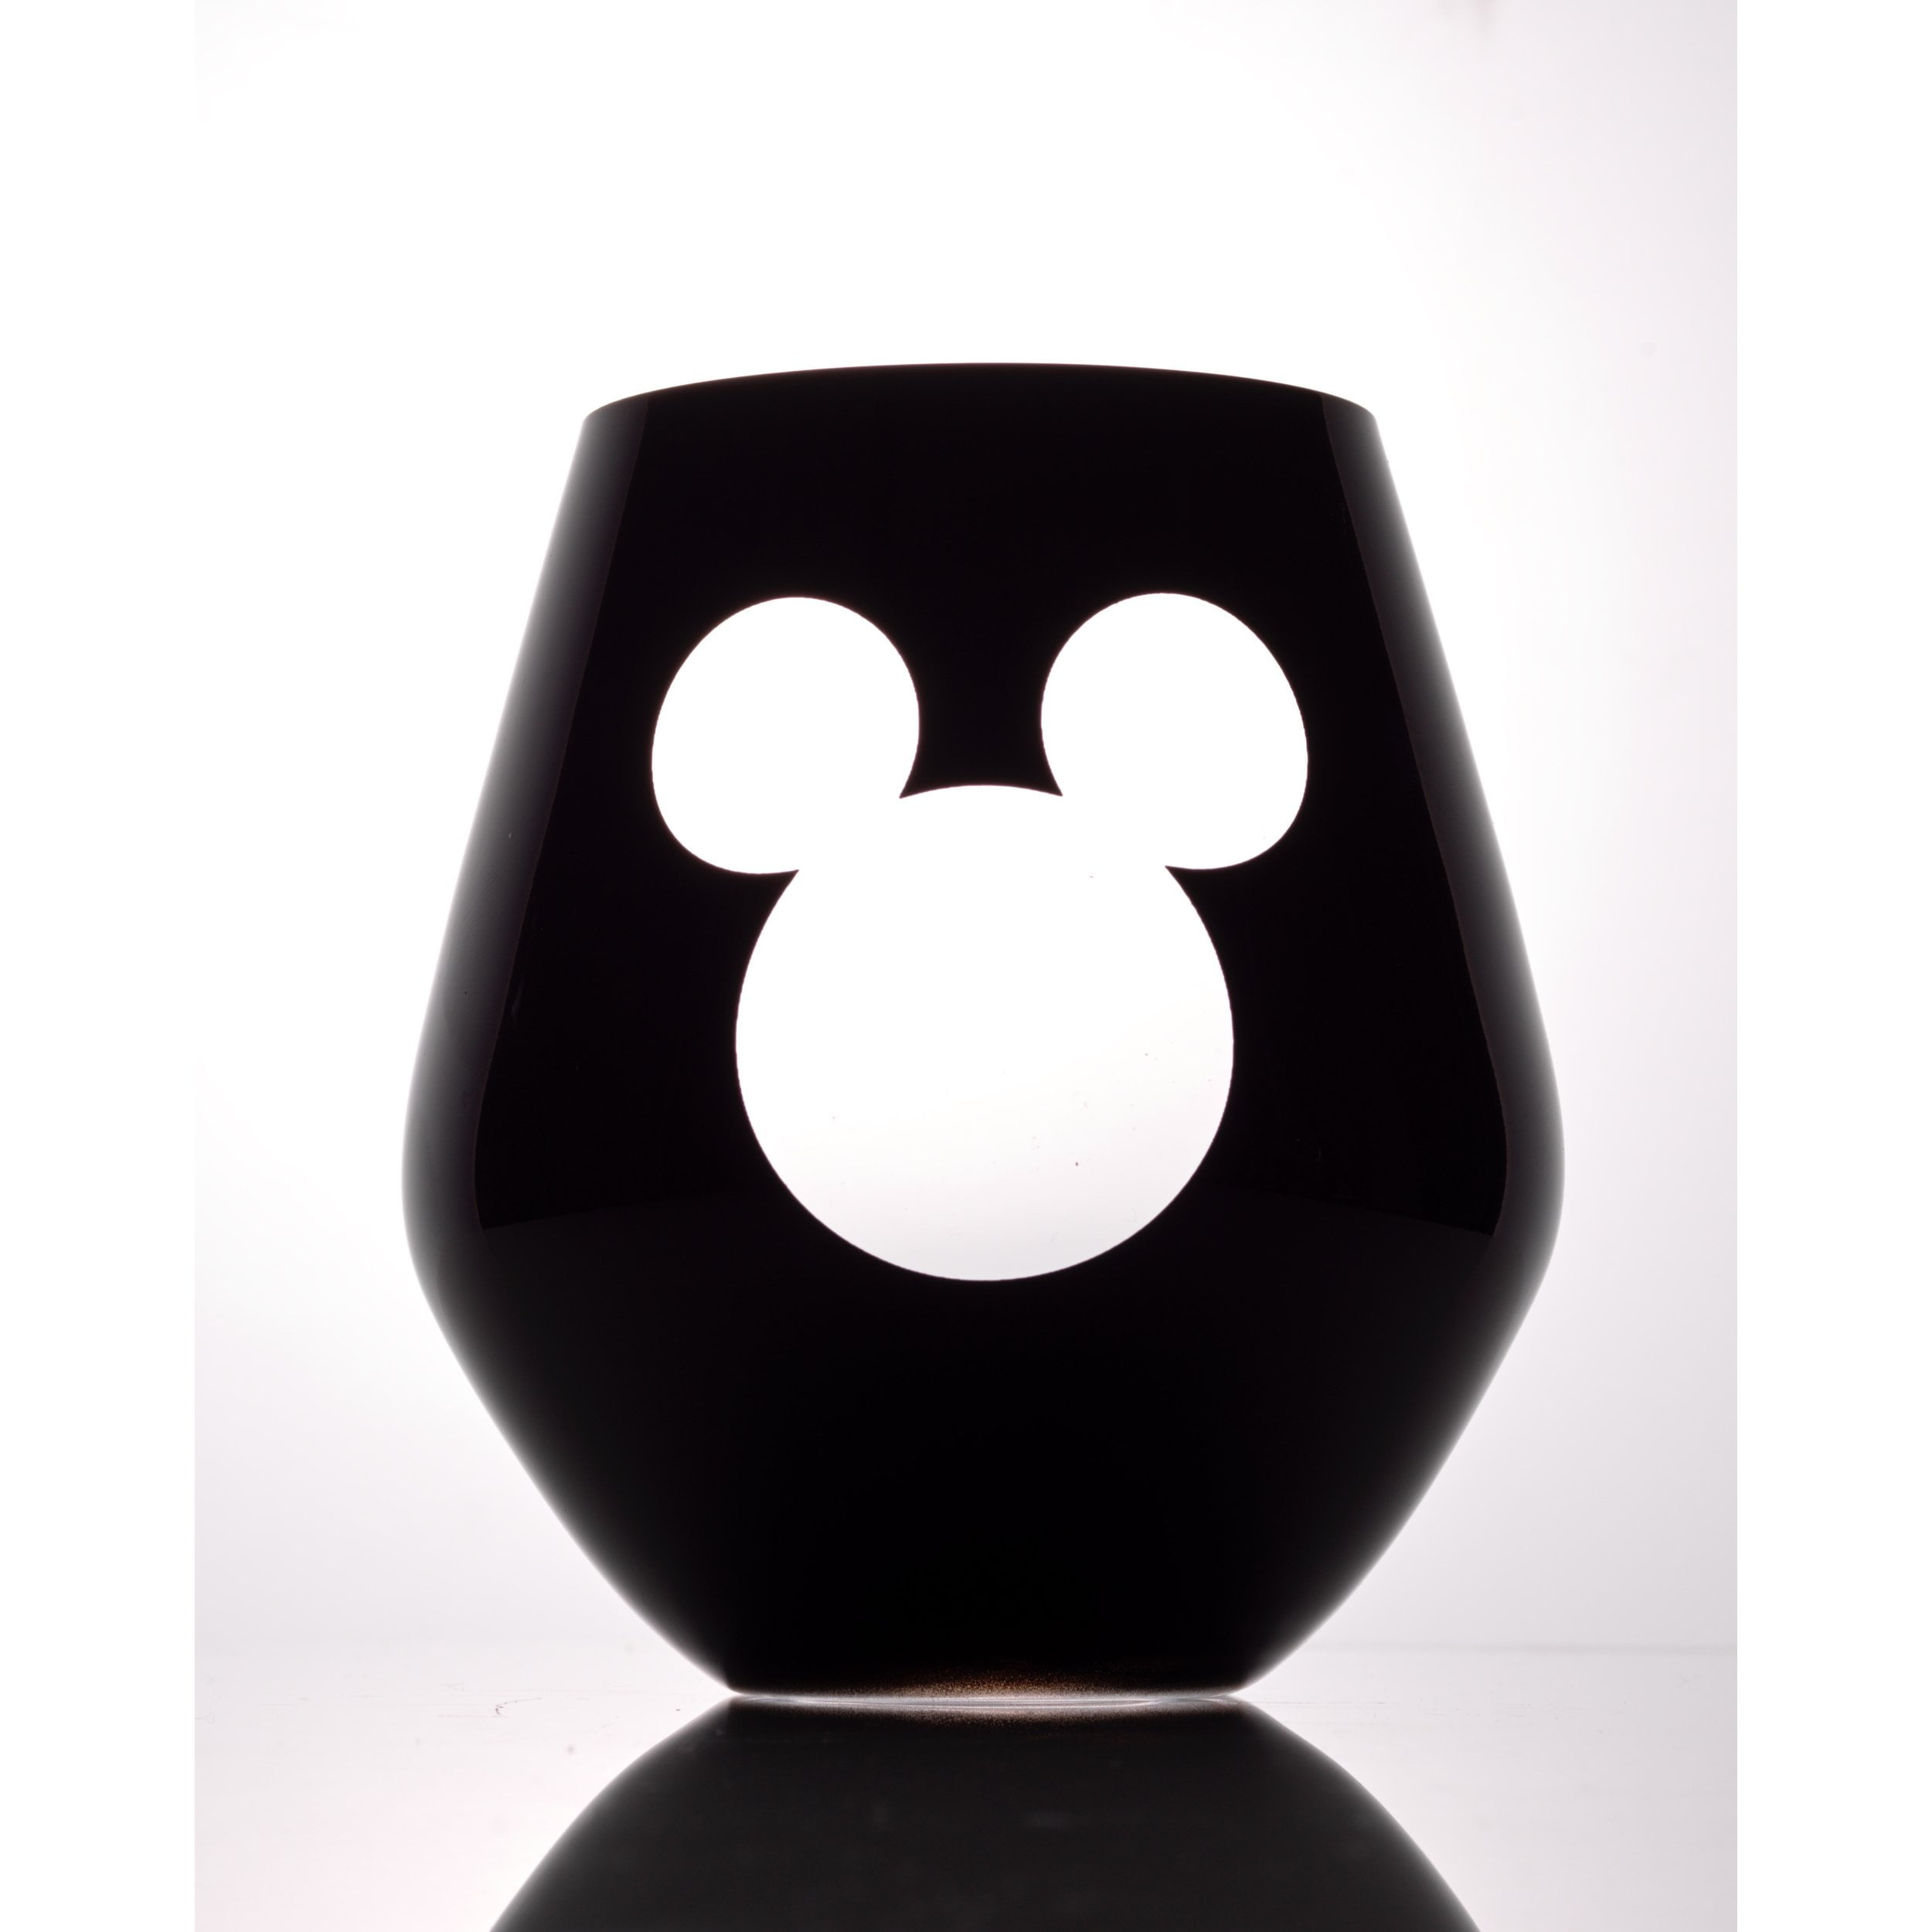 Disney Luxury Mickey Mouse Stemmed White Wine Glass - 16 oz - Set